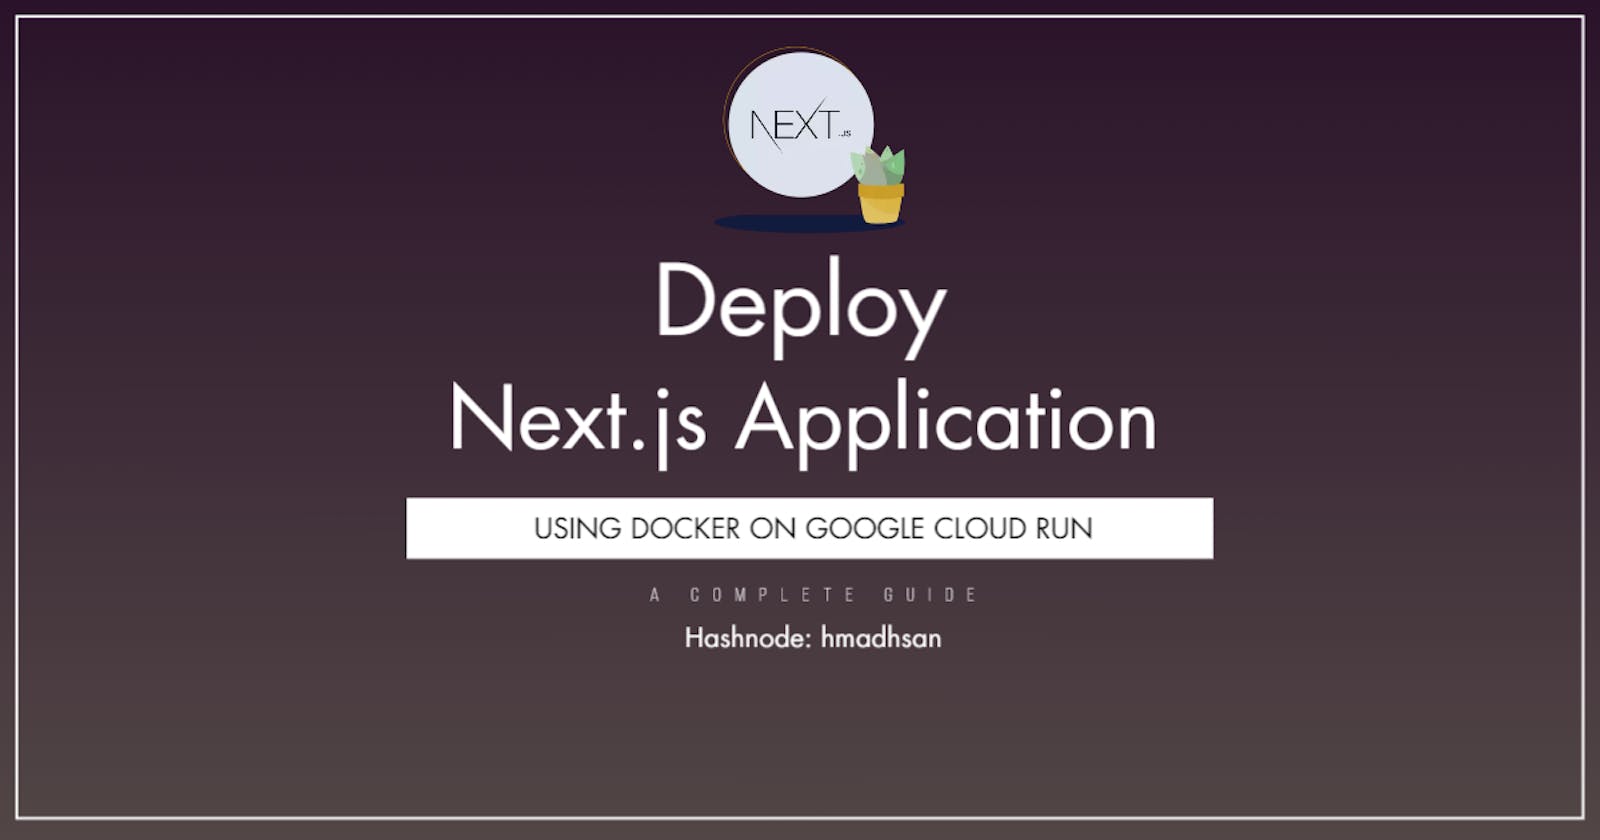 How to deploy Next.js application on google cloud using docker